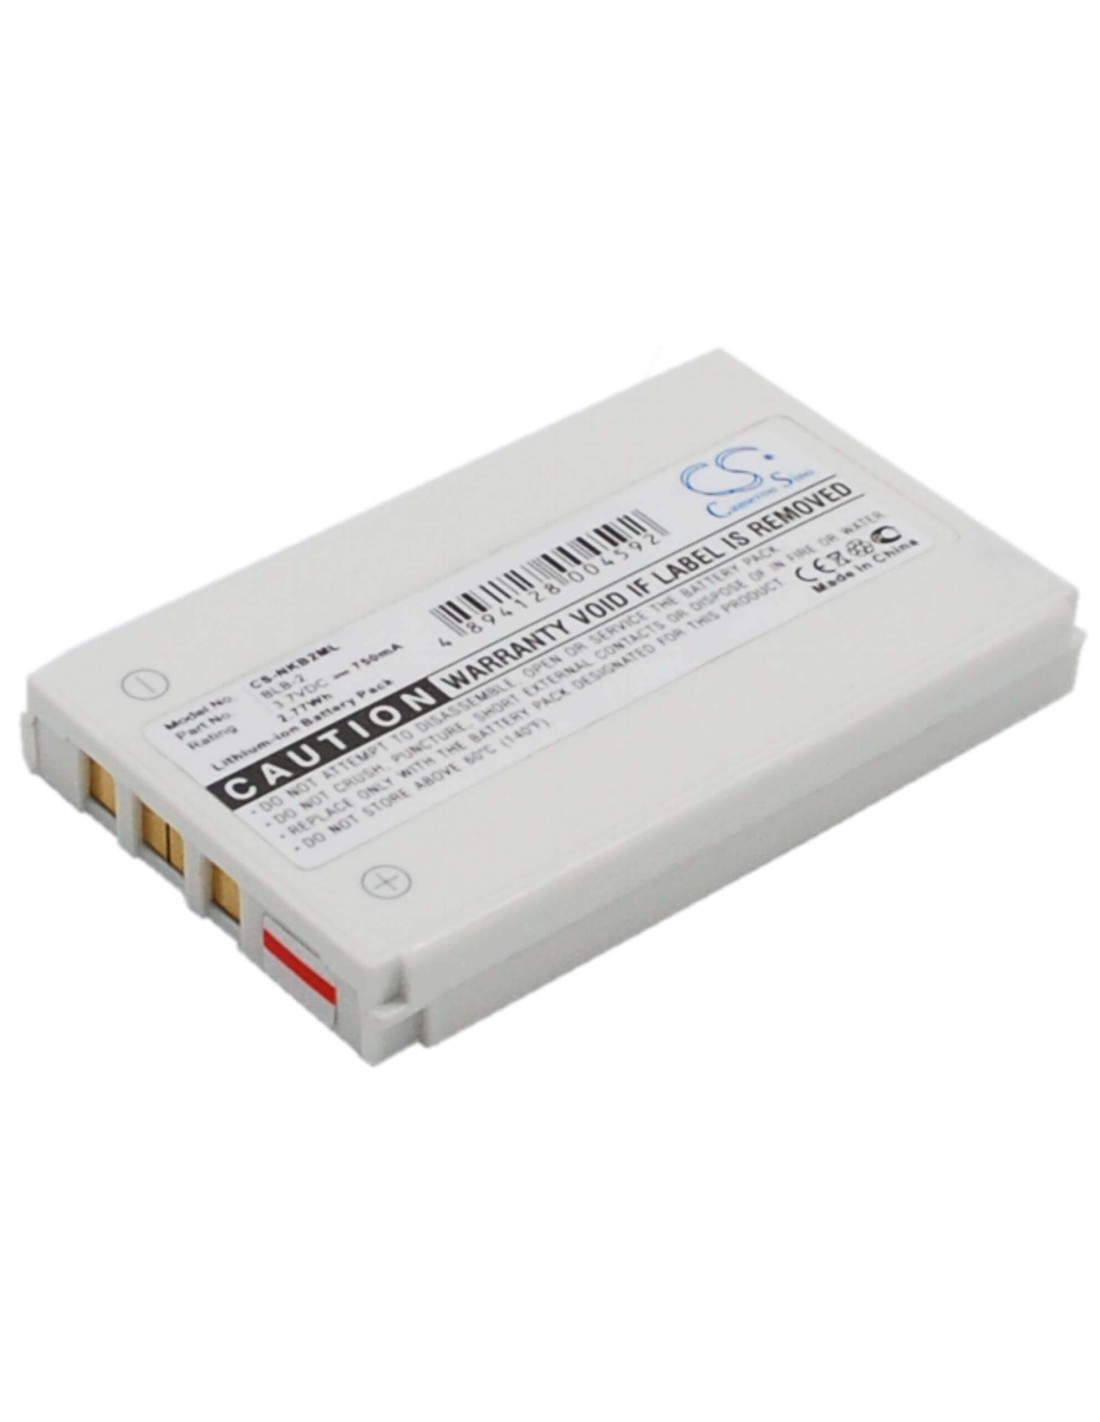 Battery for Aiptek Mpvr Digital Media 3.7V, 750mAh - 2.78Wh